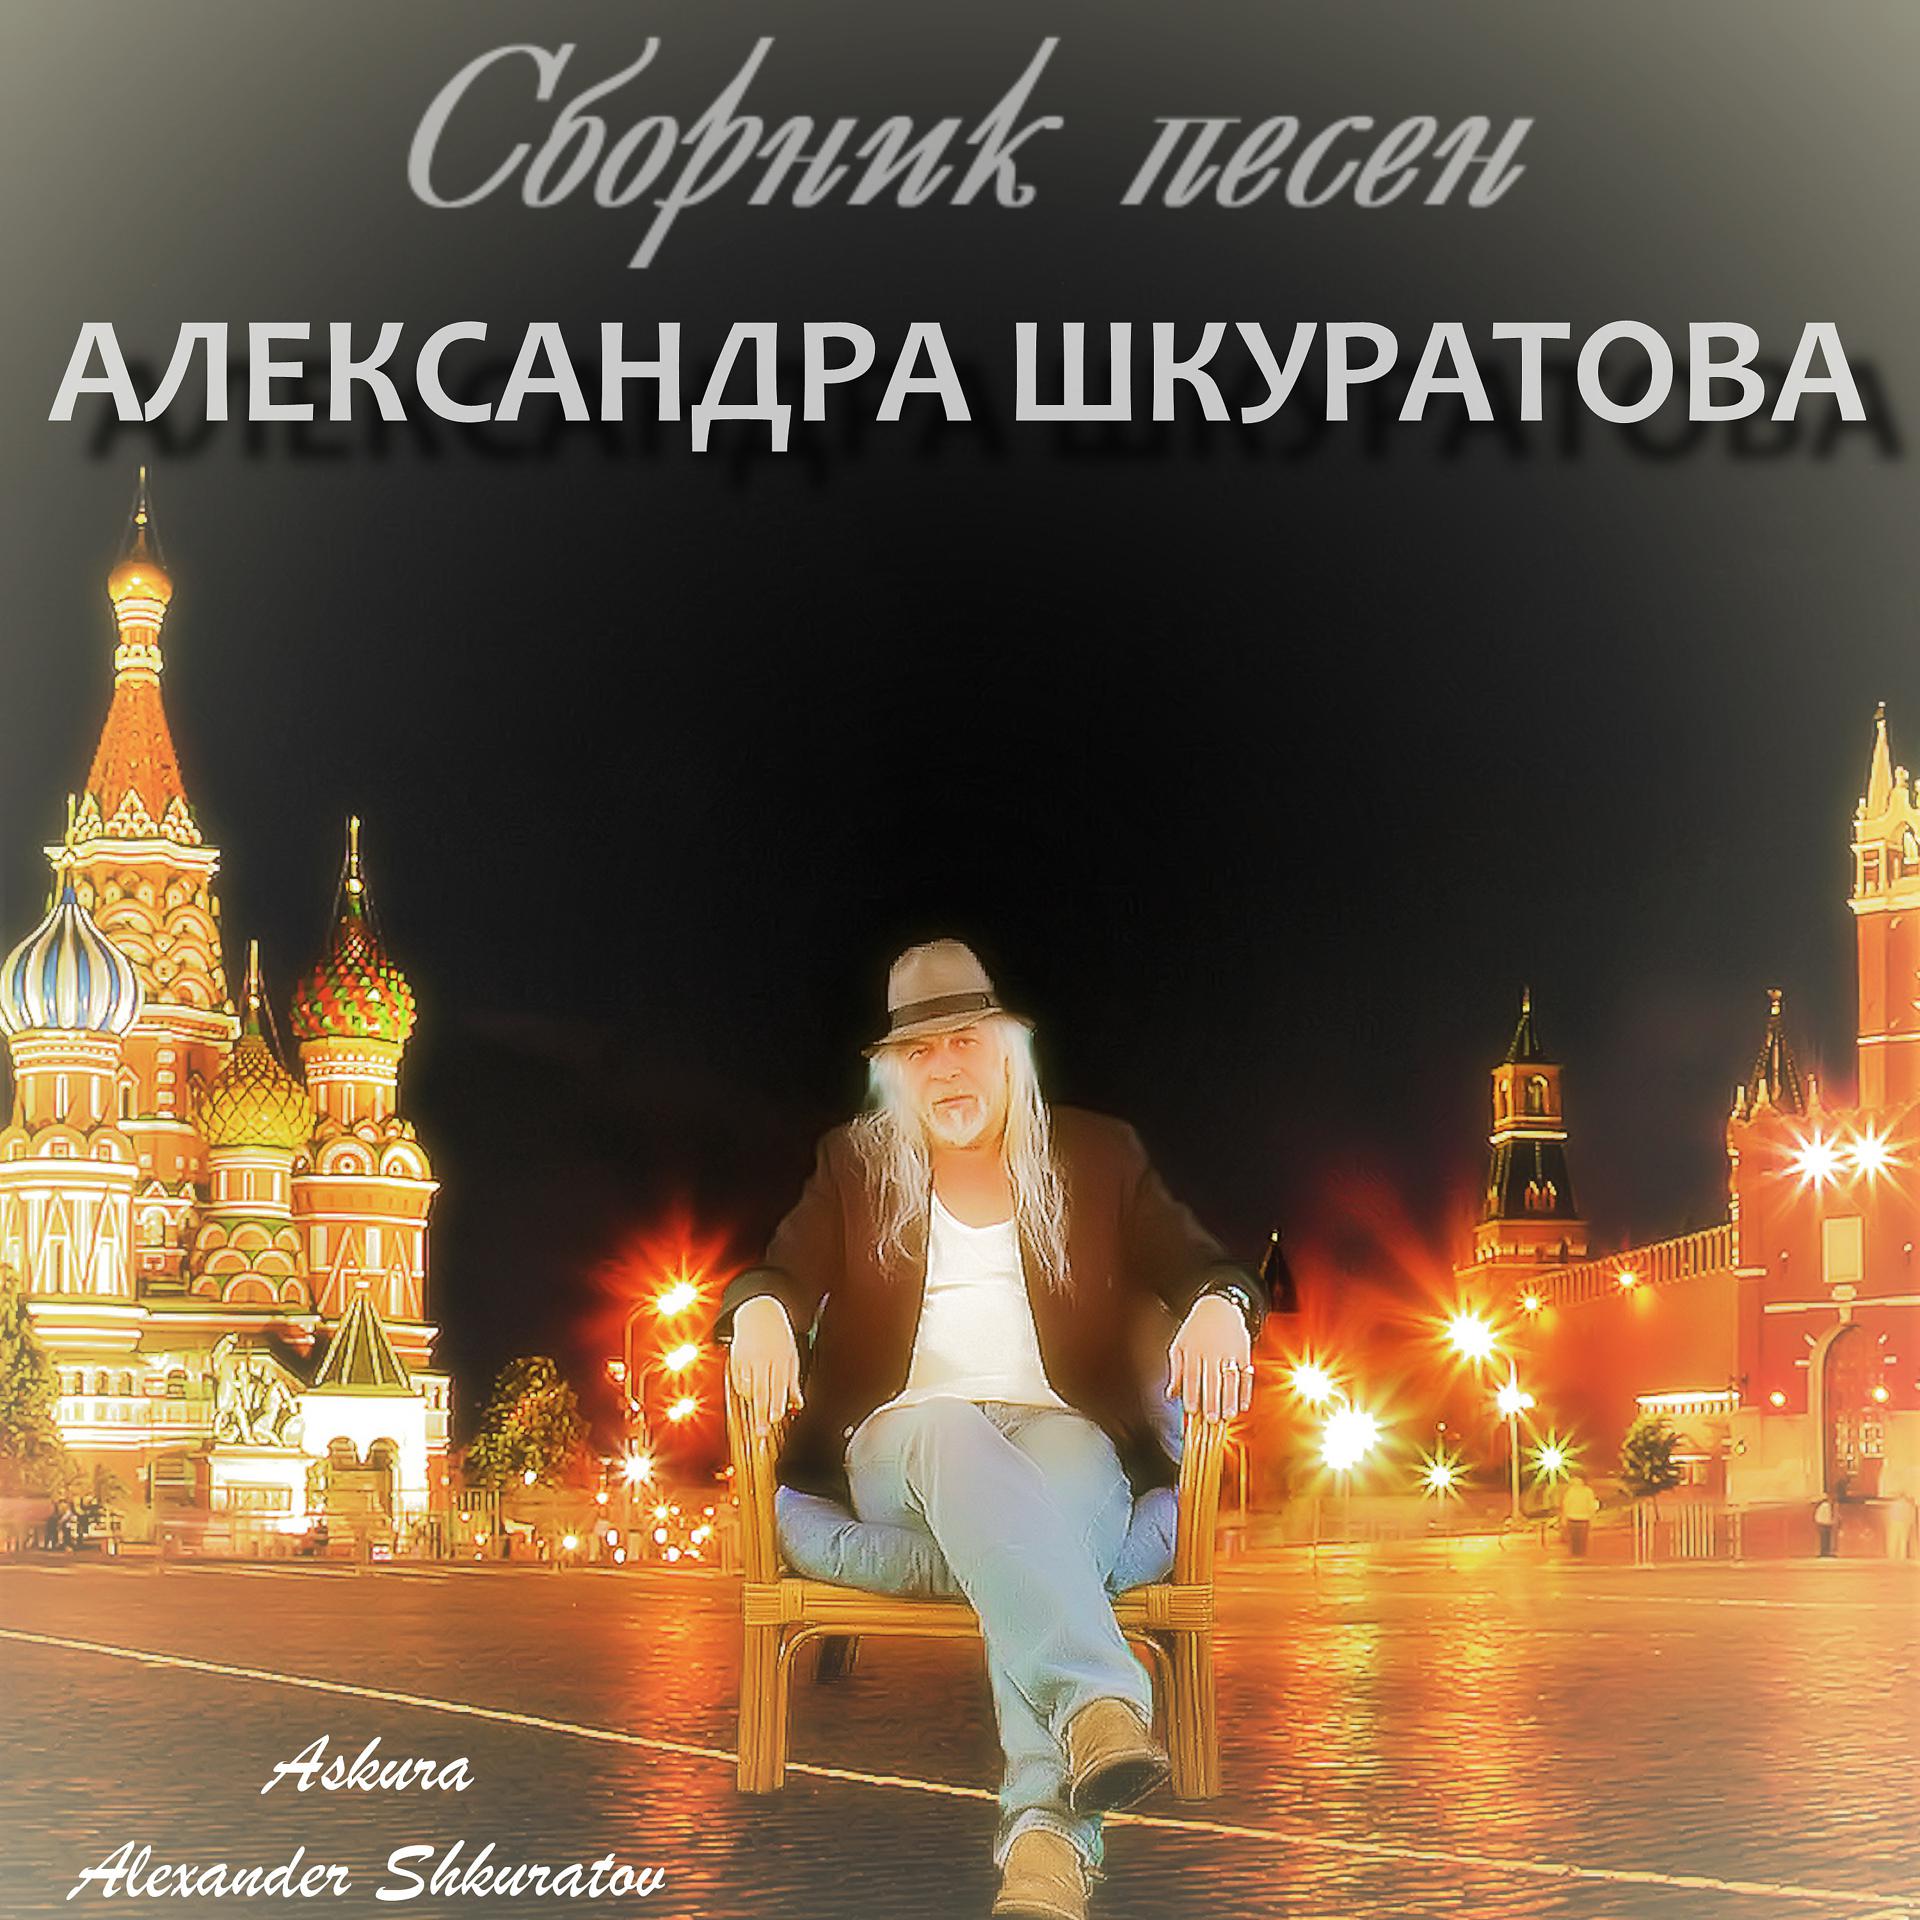 Постер к треку Askura Alexander Shkuratov, Анжелика Агурбаш - Судьбинка